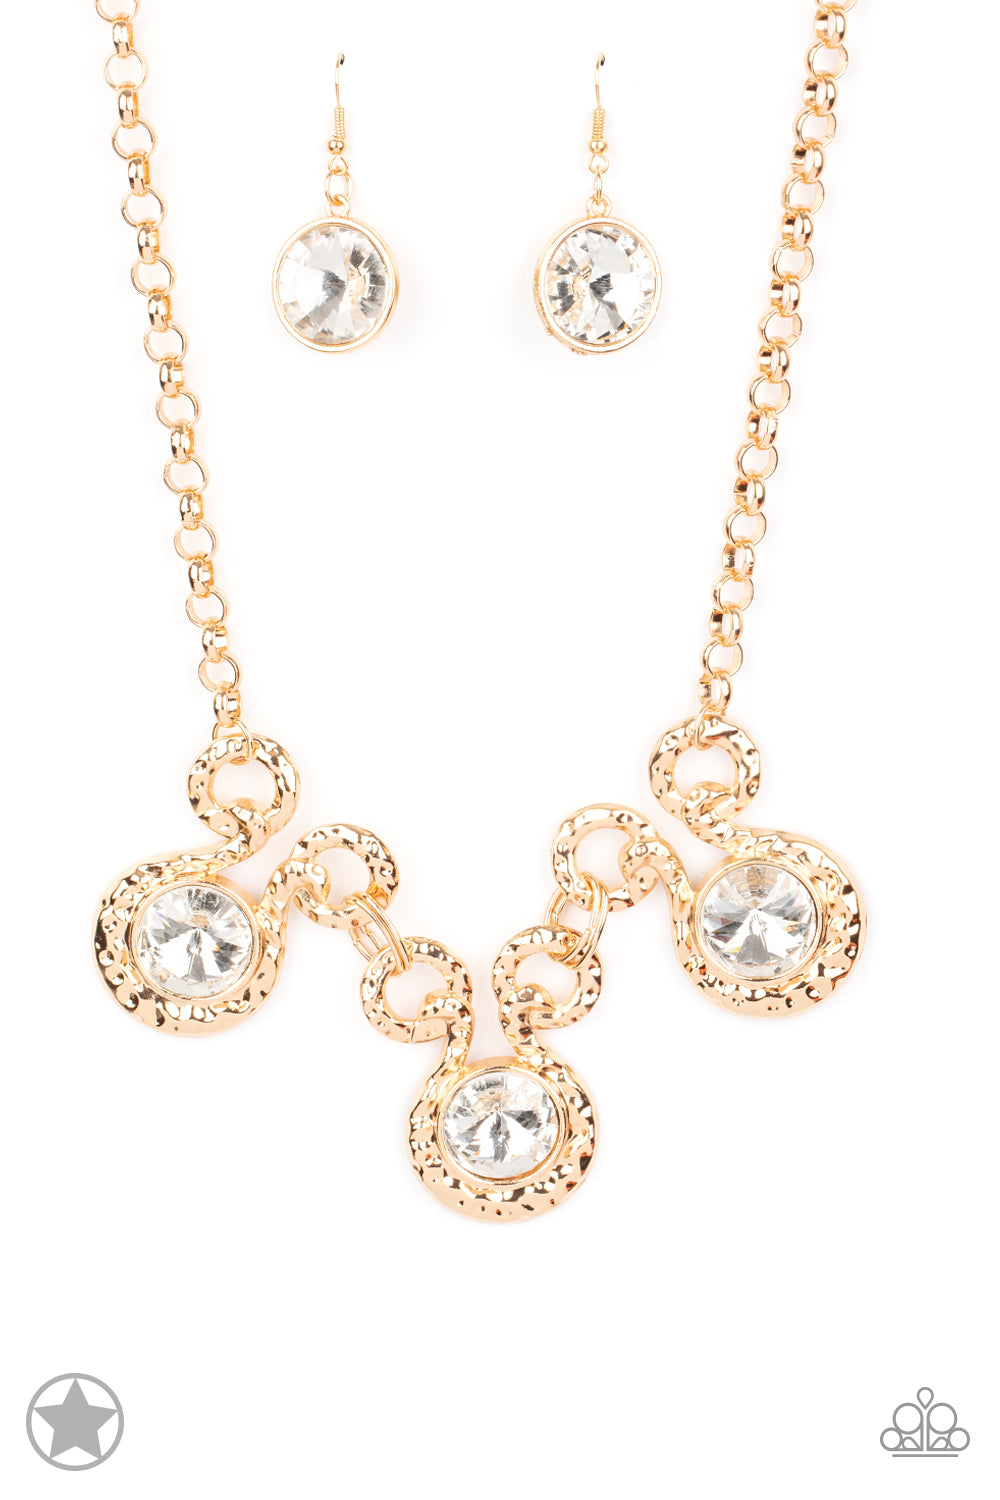 Hypnotized - Gold and Rhinestone Necklace - Paparazzi Accessories